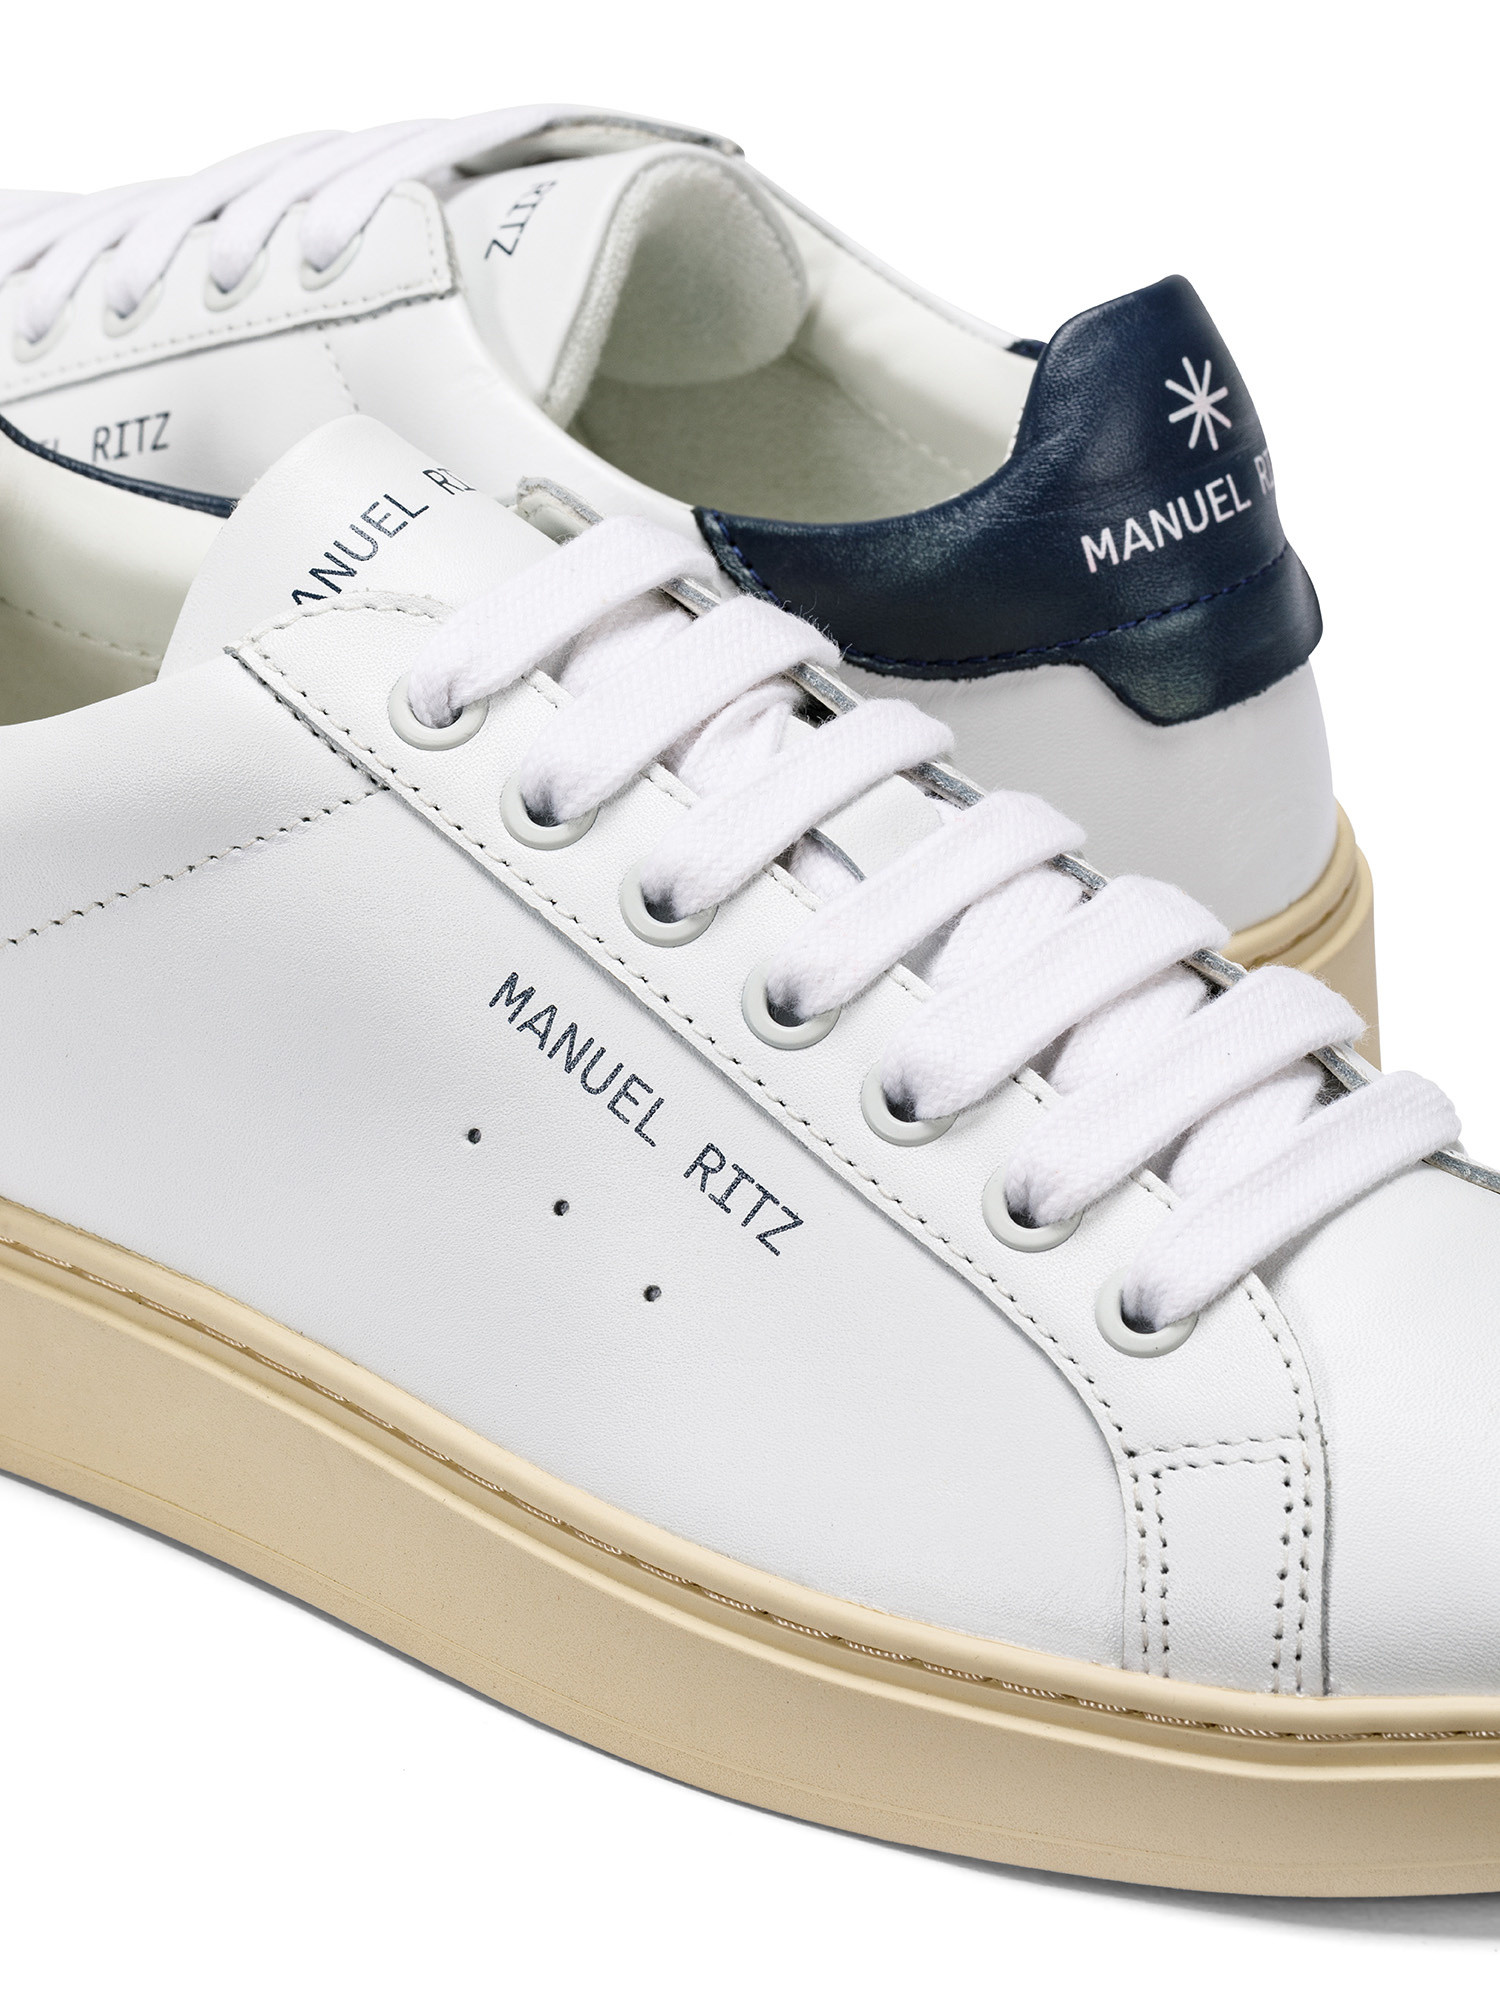 Manuel Ritz - Sneakers in pelle, Bianco, large image number 2